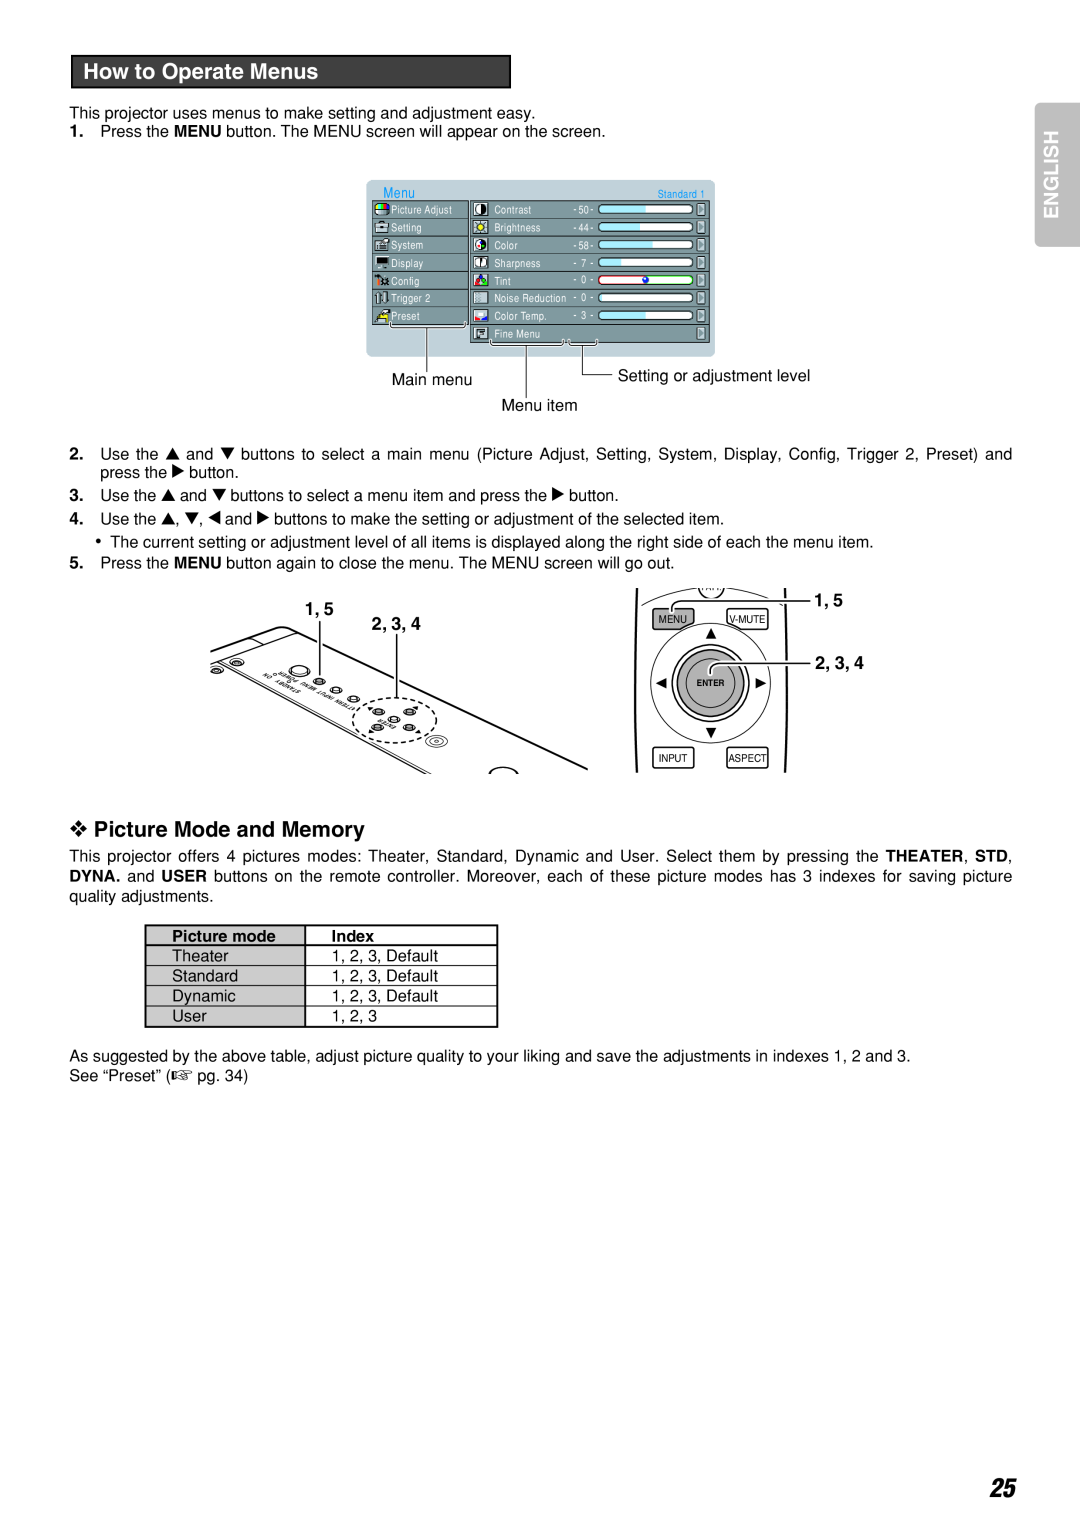 Marantz Model VP-10S1 manual How to Operate Menus, Picture Mode and Memory, English, 2, 3, Main menu 